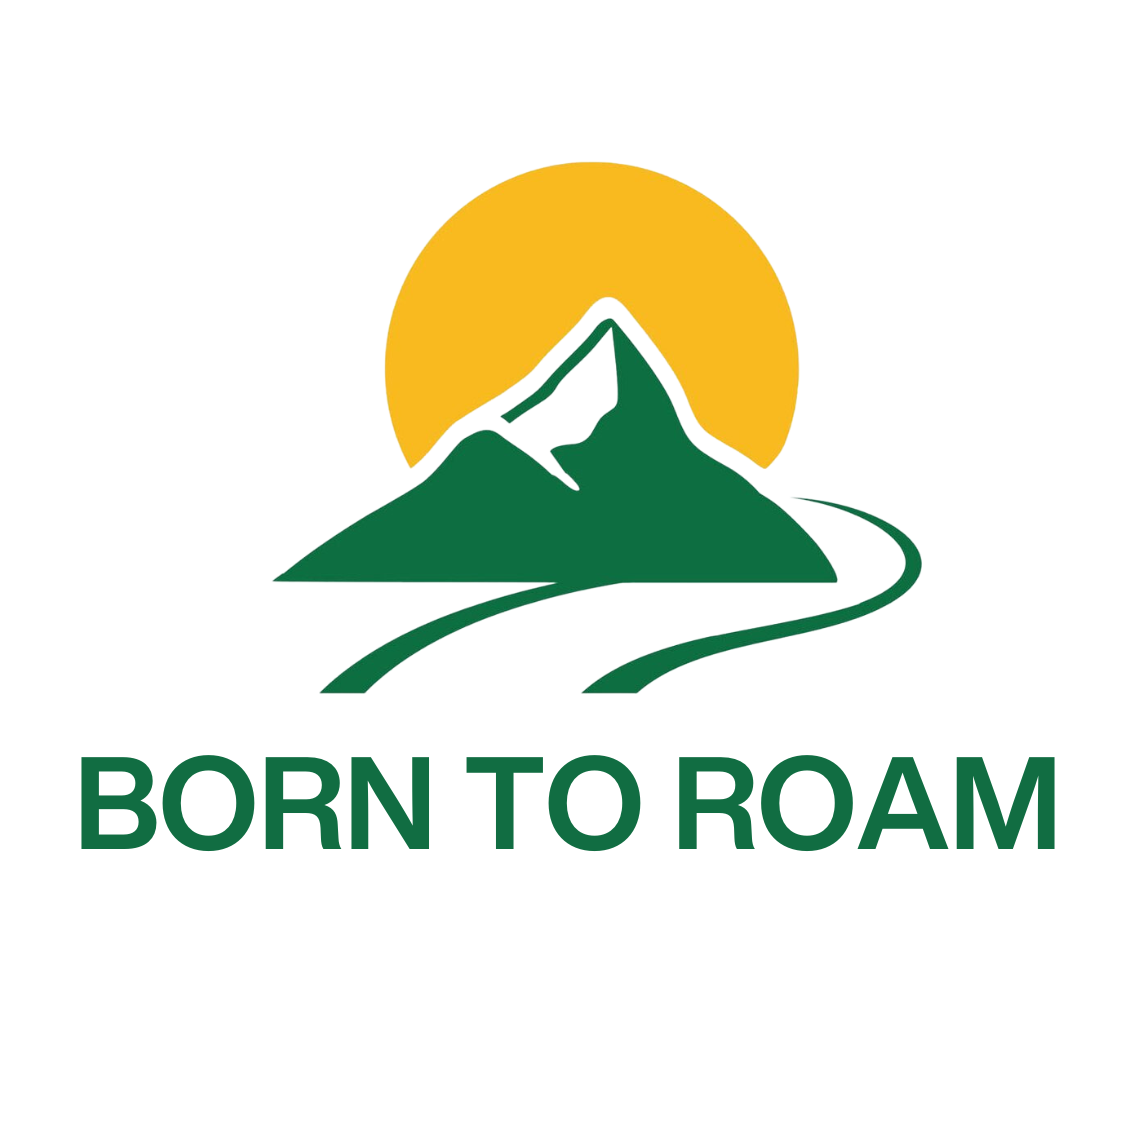 BORN TO ROAM